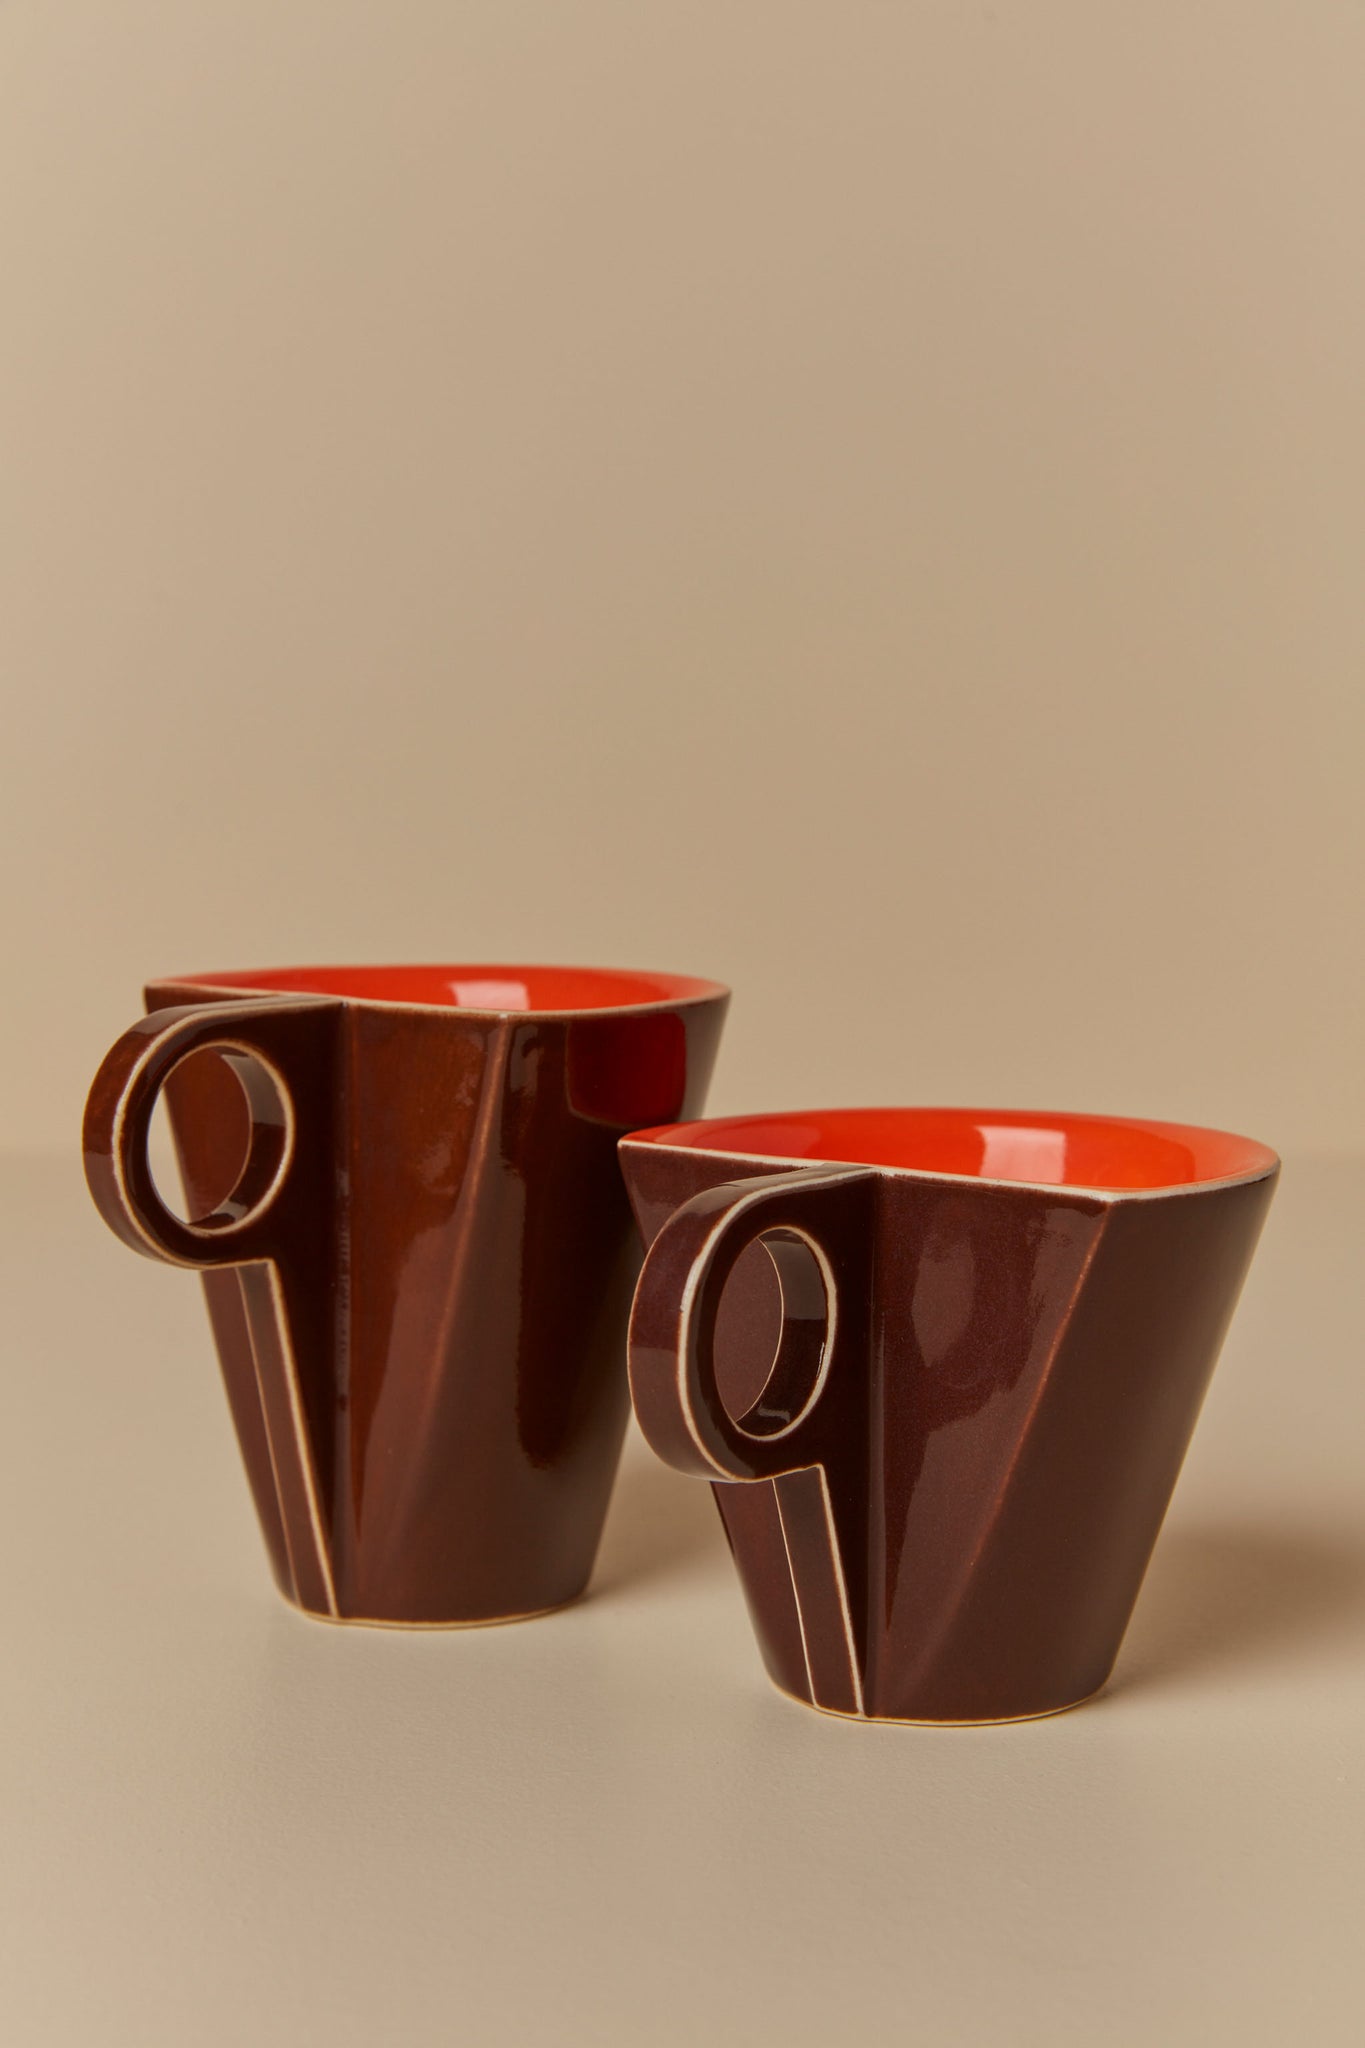 Yuro Cuchor – Small Deco Mug, Chocolate and Orange